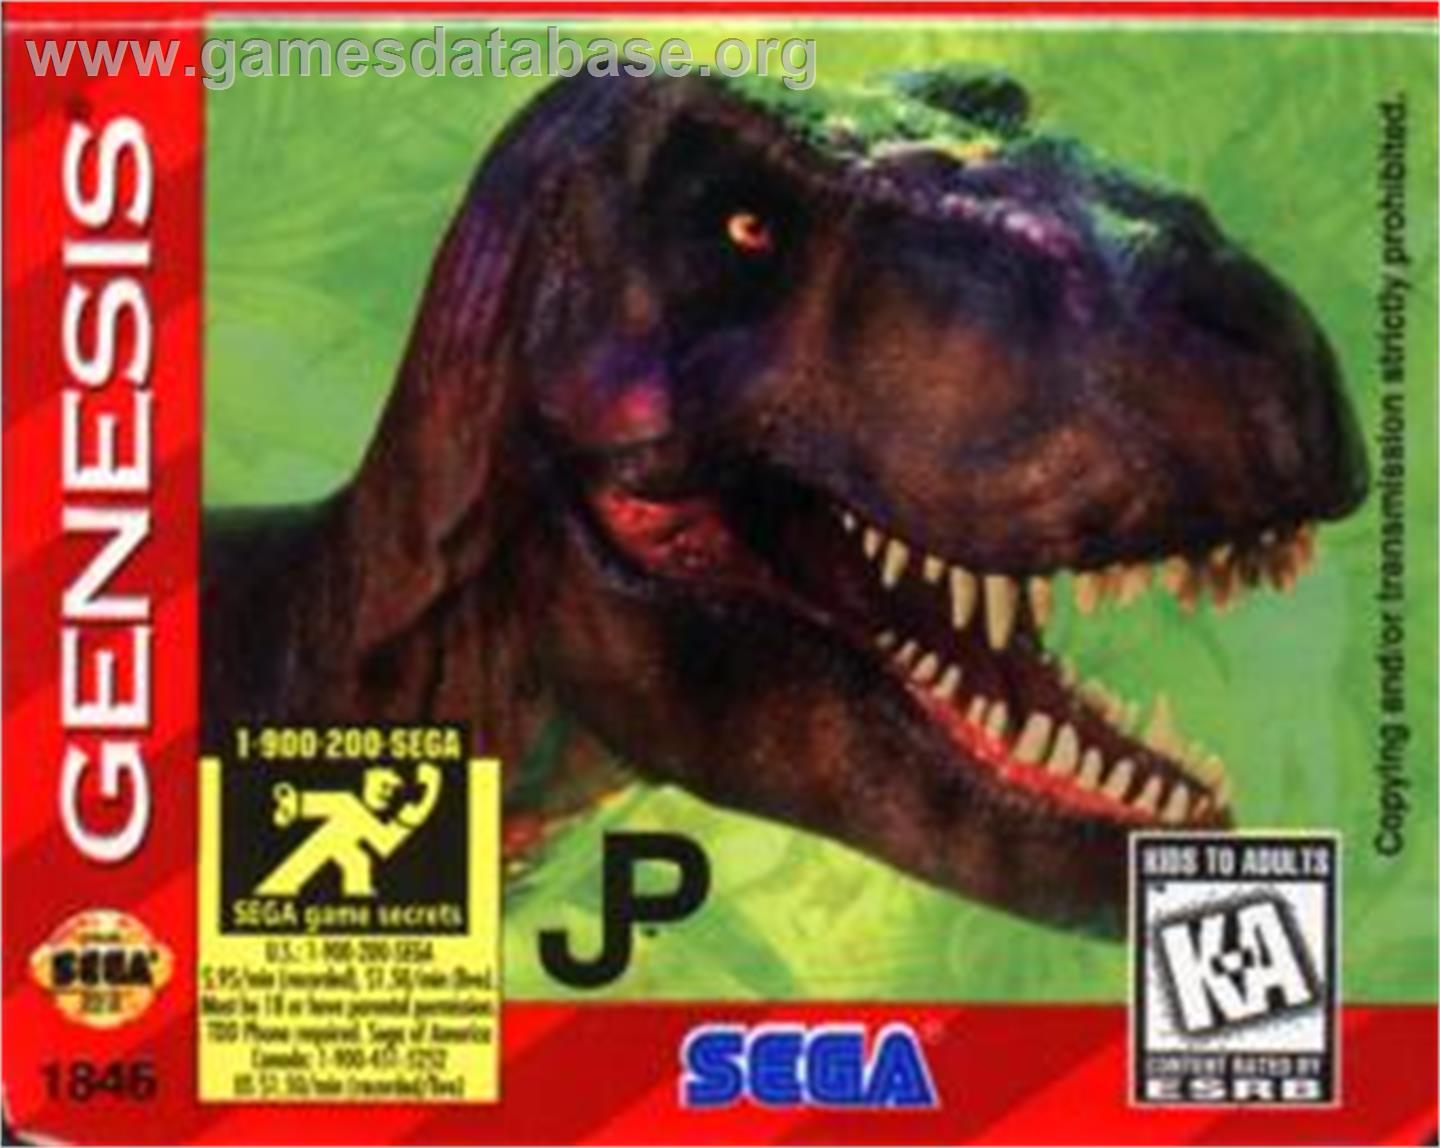 Jurassic Park 2 - The Lost World - Sega Nomad - Artwork - Cartridge